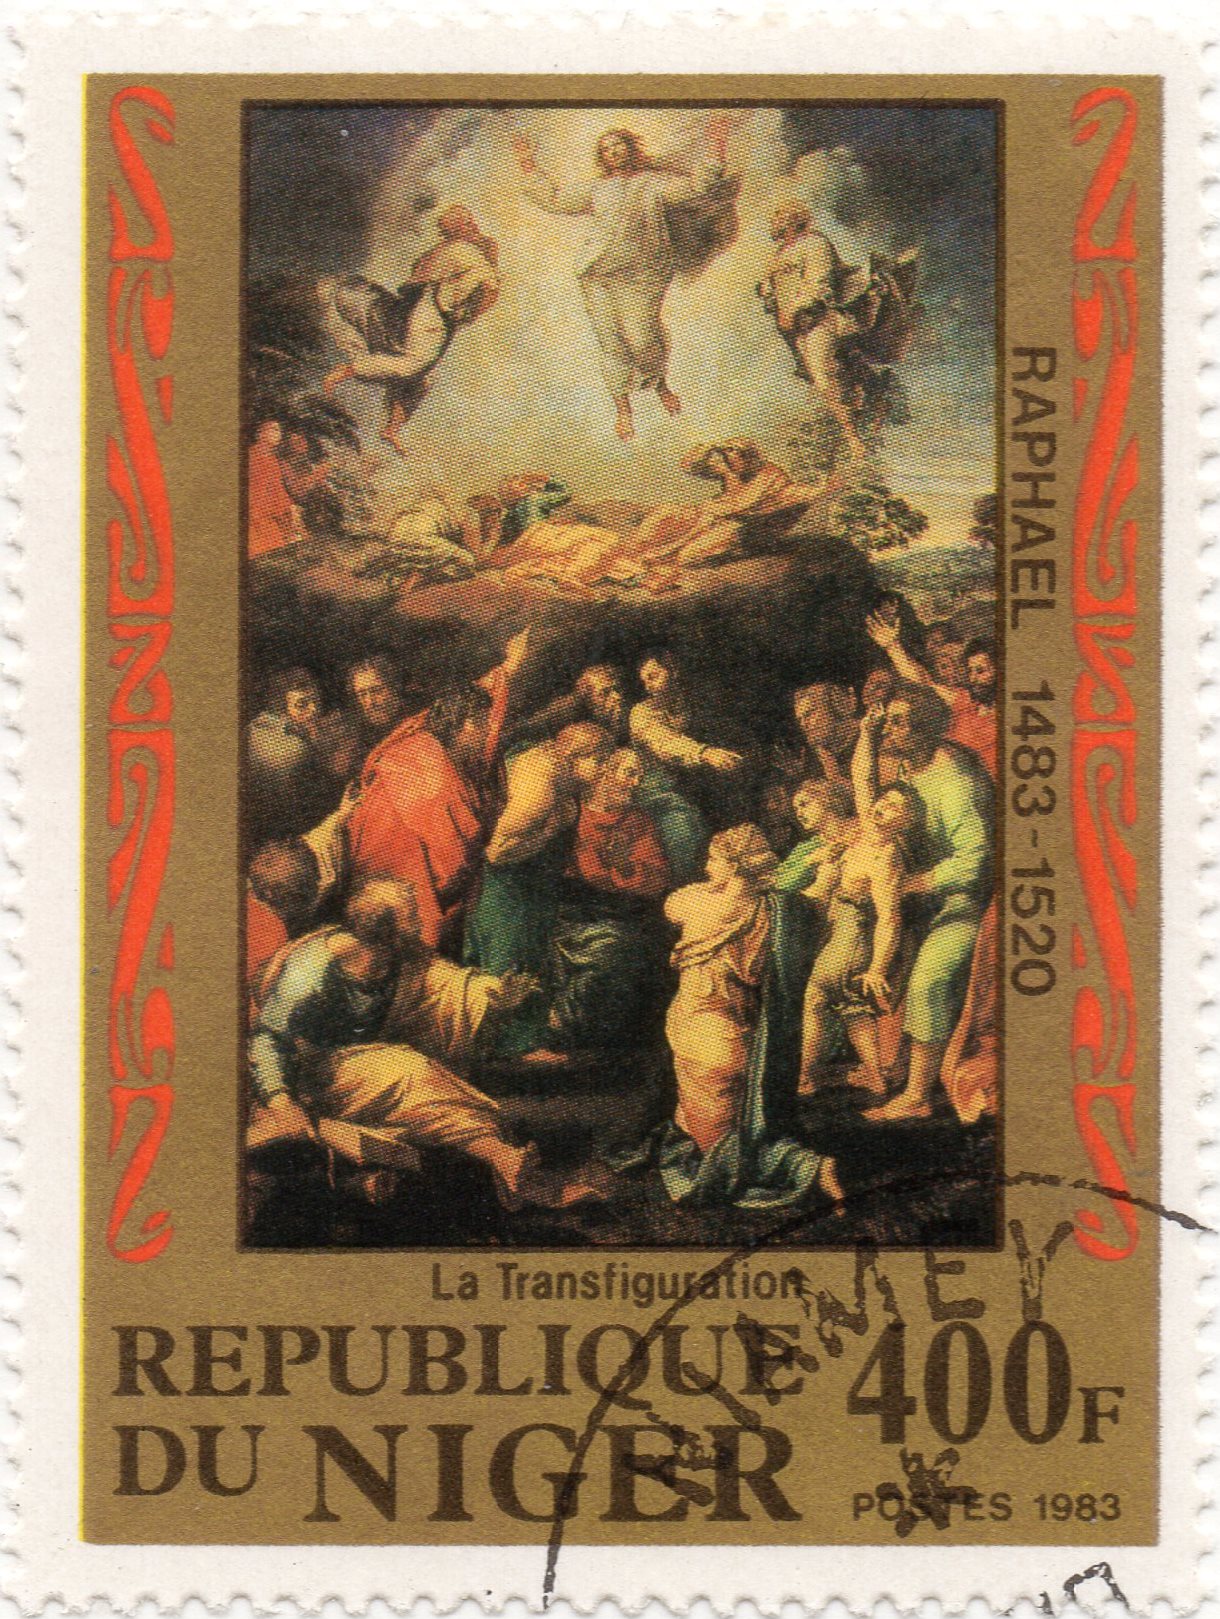 nft #7 The Transfiguration Raphael 1483 - 1520 Republic of Niger 400 f. postes 1983